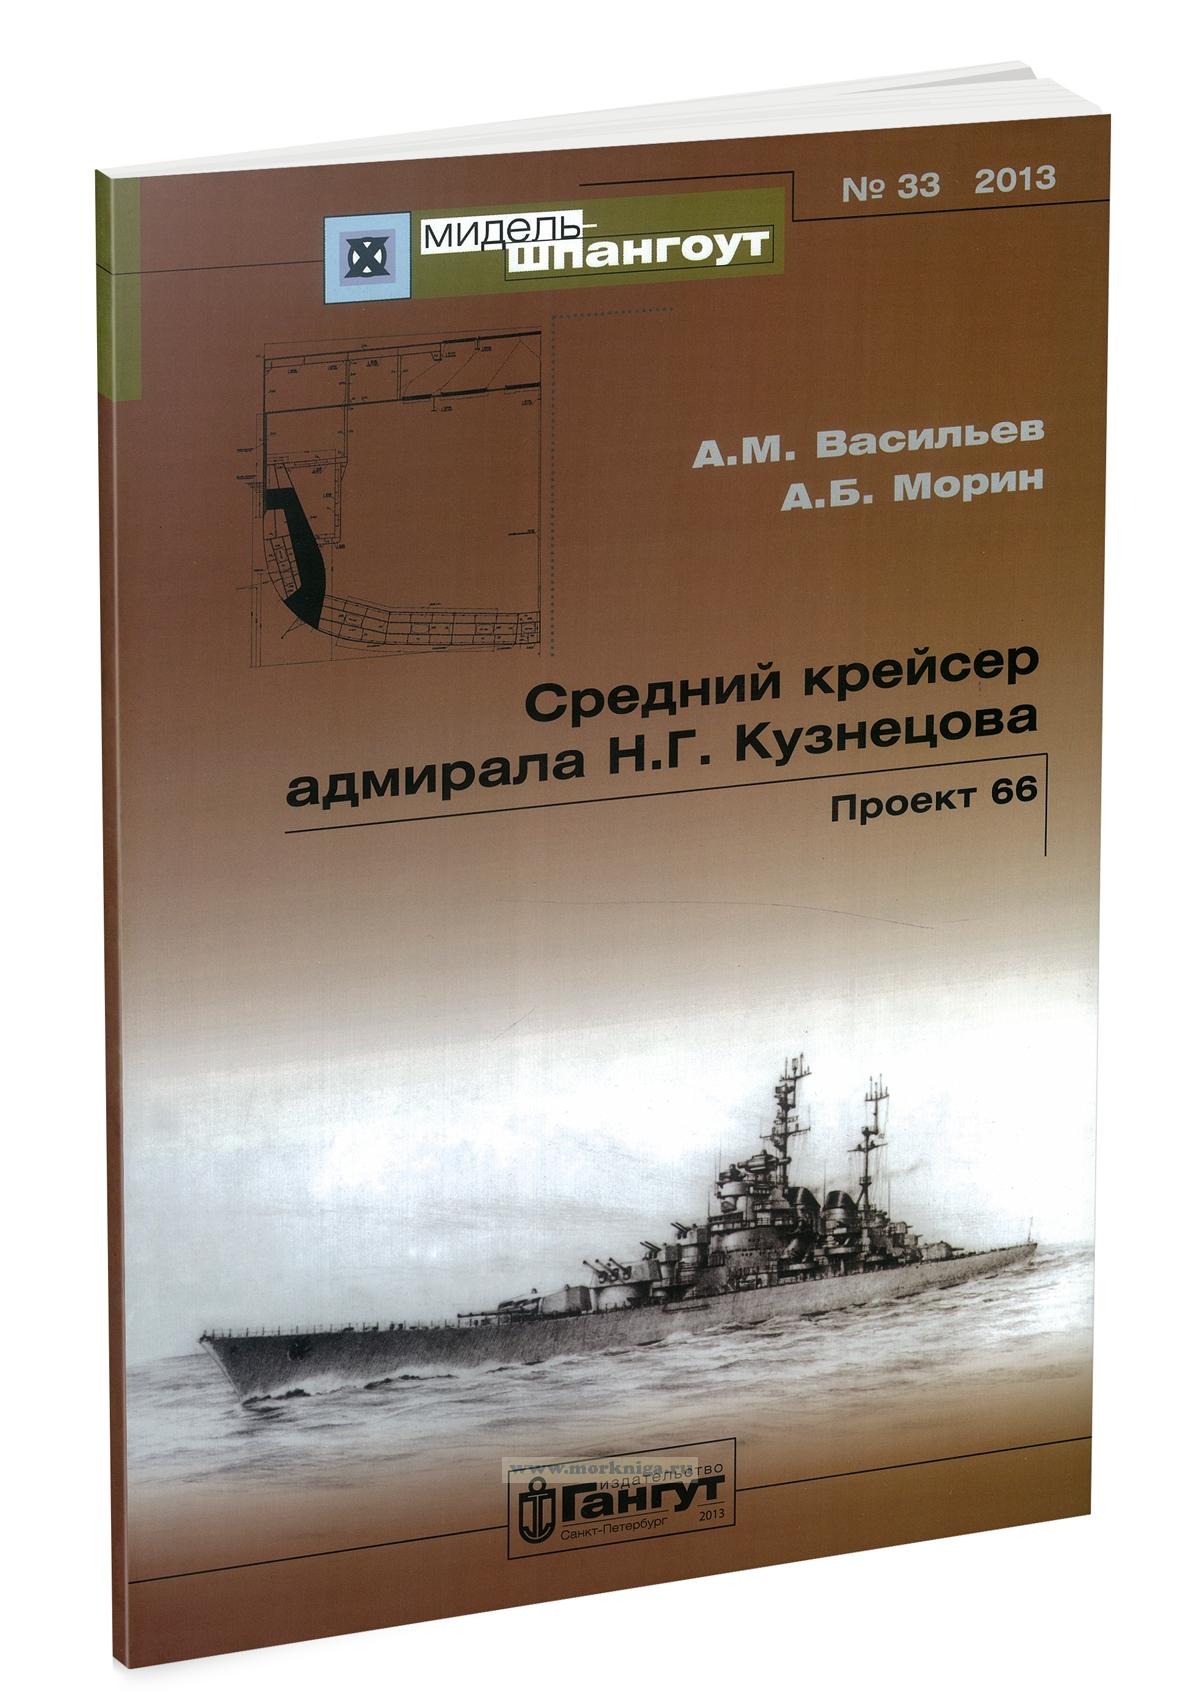 Средний крейсер адмирала Н.Г. Кузнецова. Проект 66 №33 2013